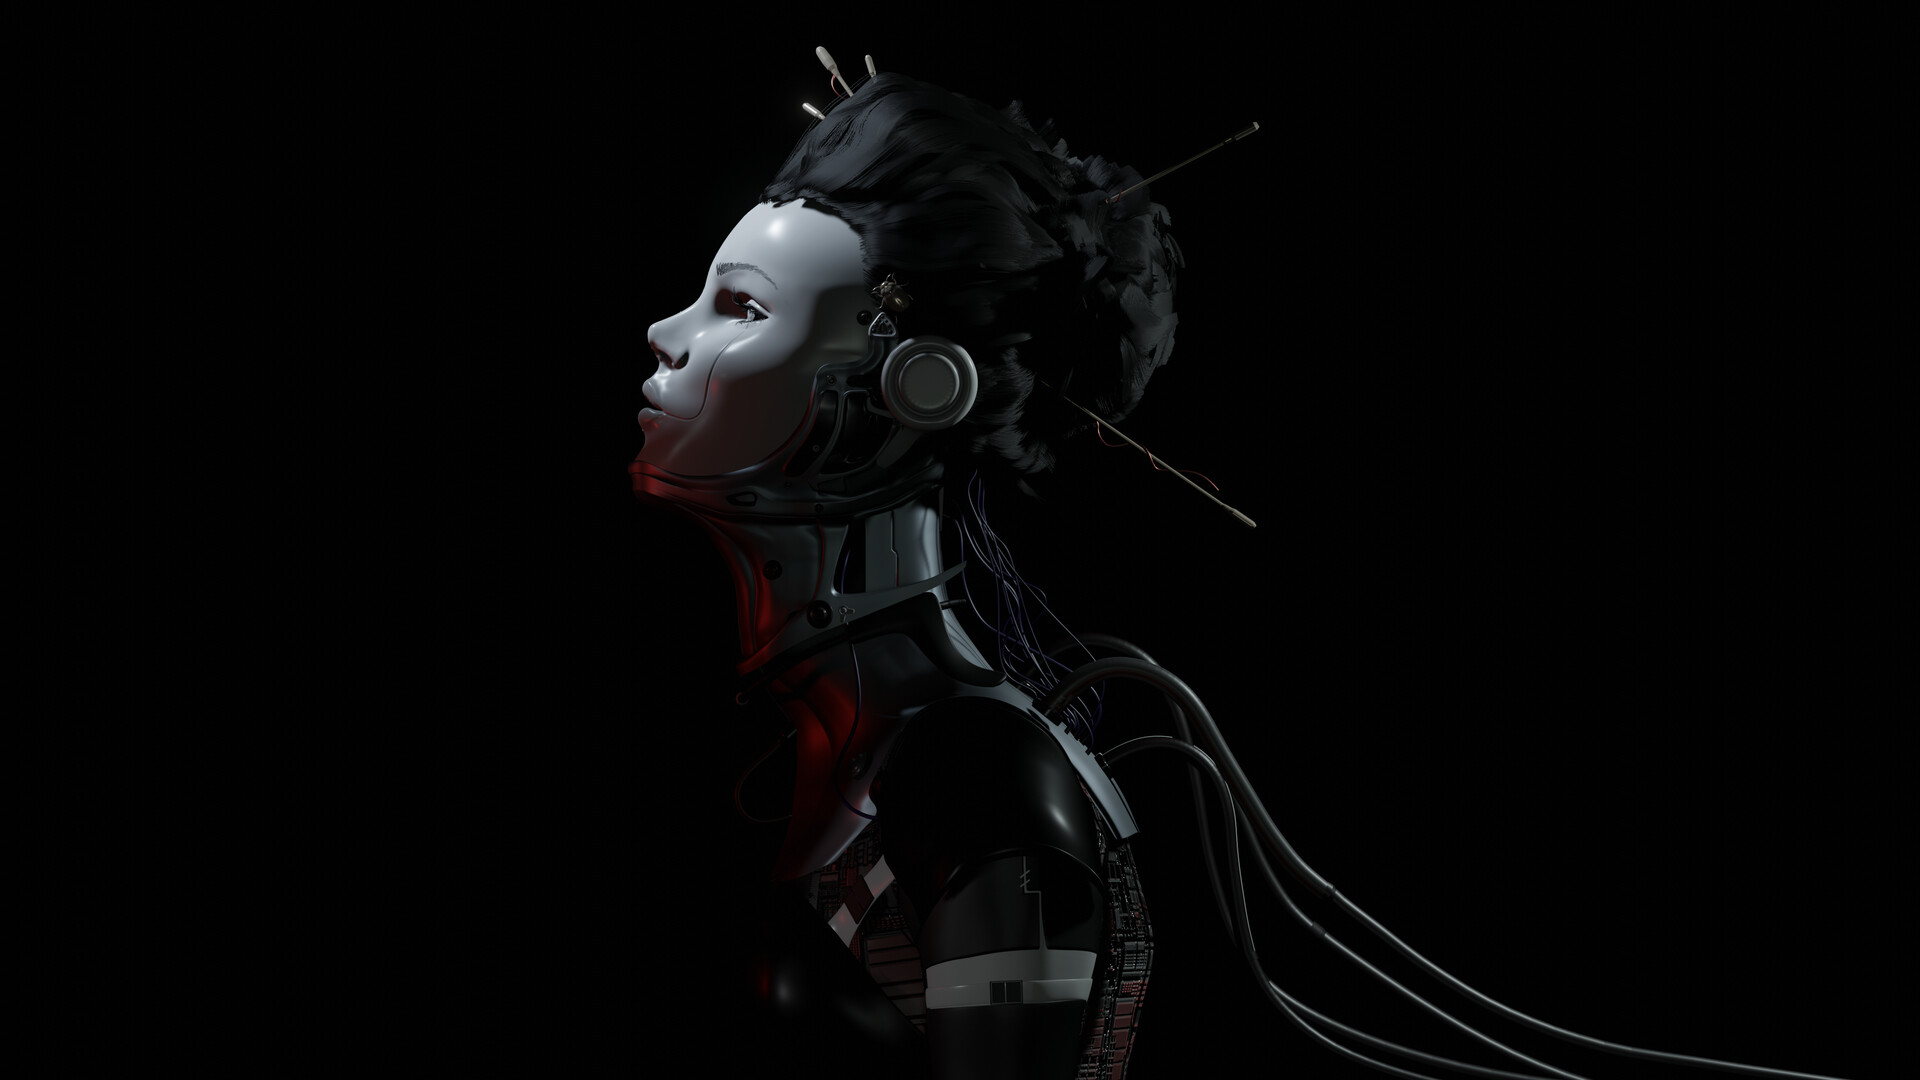 Cyberpunk bass. Cyberpunk 2077 Элизабет Моралес. Darksynth Cyberpunk. Киберпанк безумие. Гейша киберпанк.